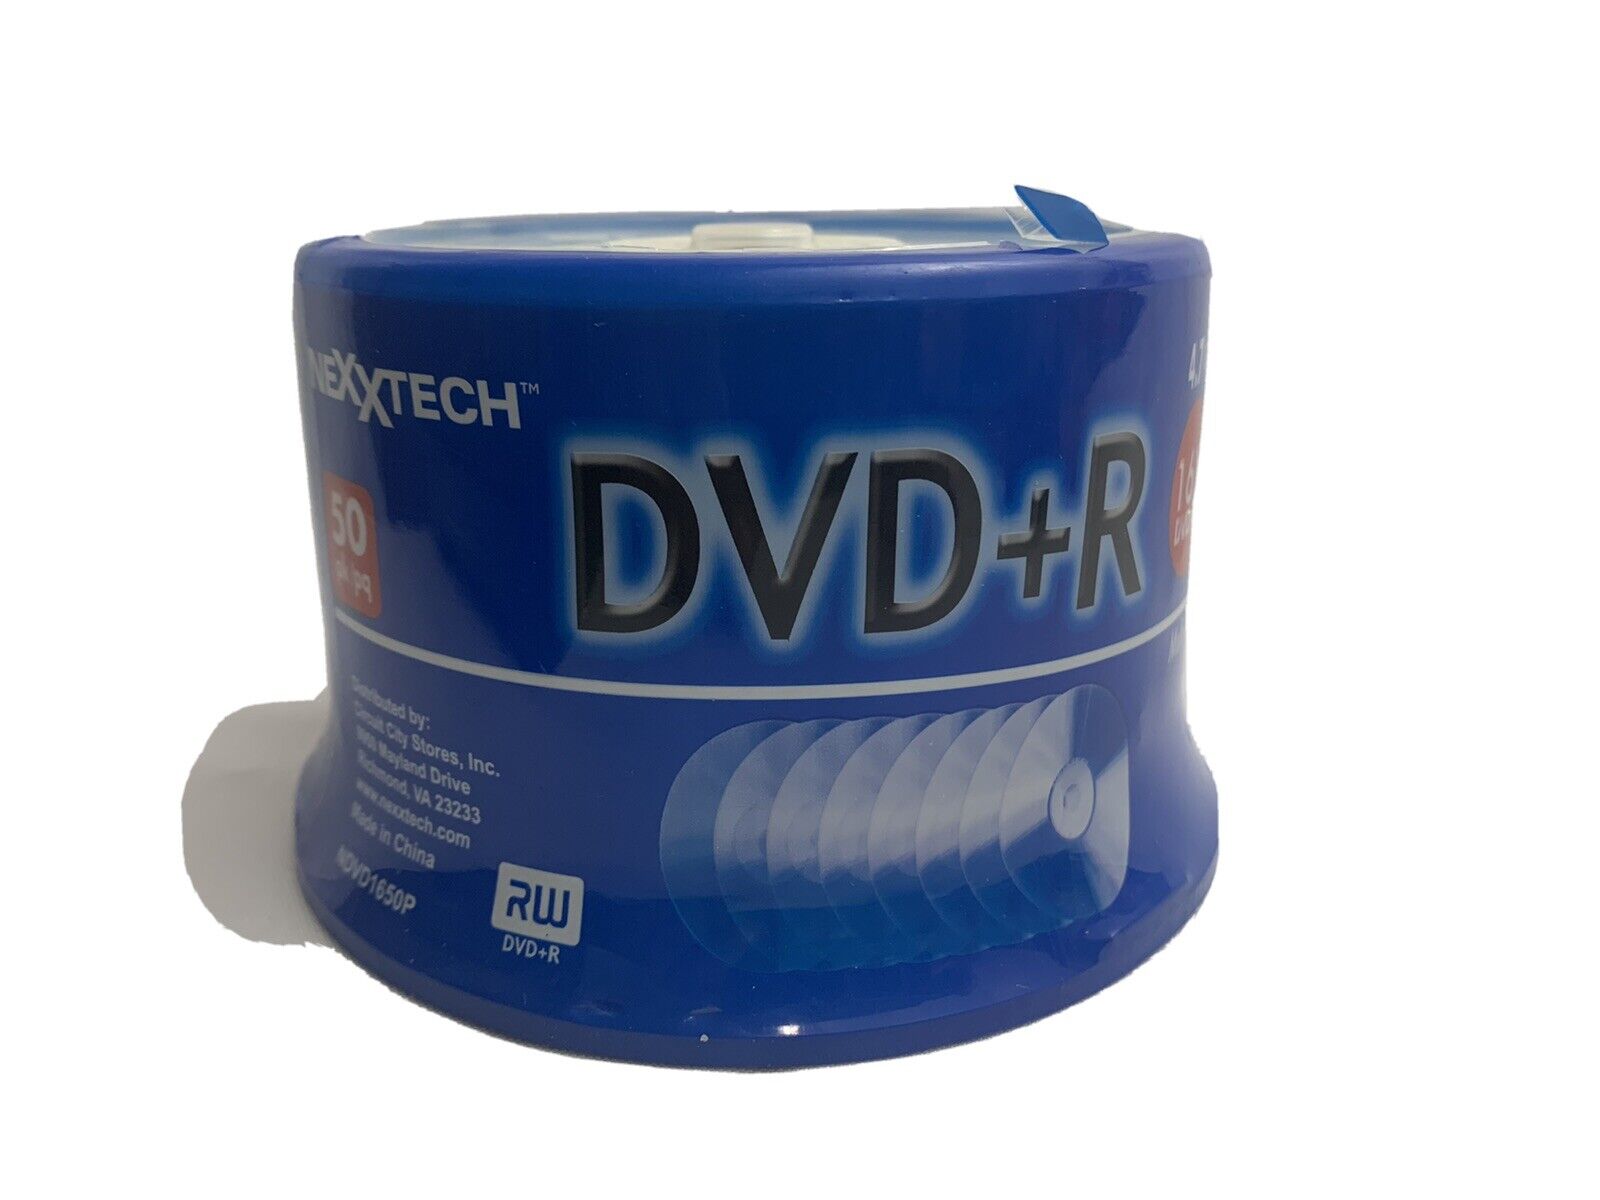 Nexxtech 16x DVD-R 4.7GB 120 Min Video Multi-Speed, up to 16x - 50 Pack